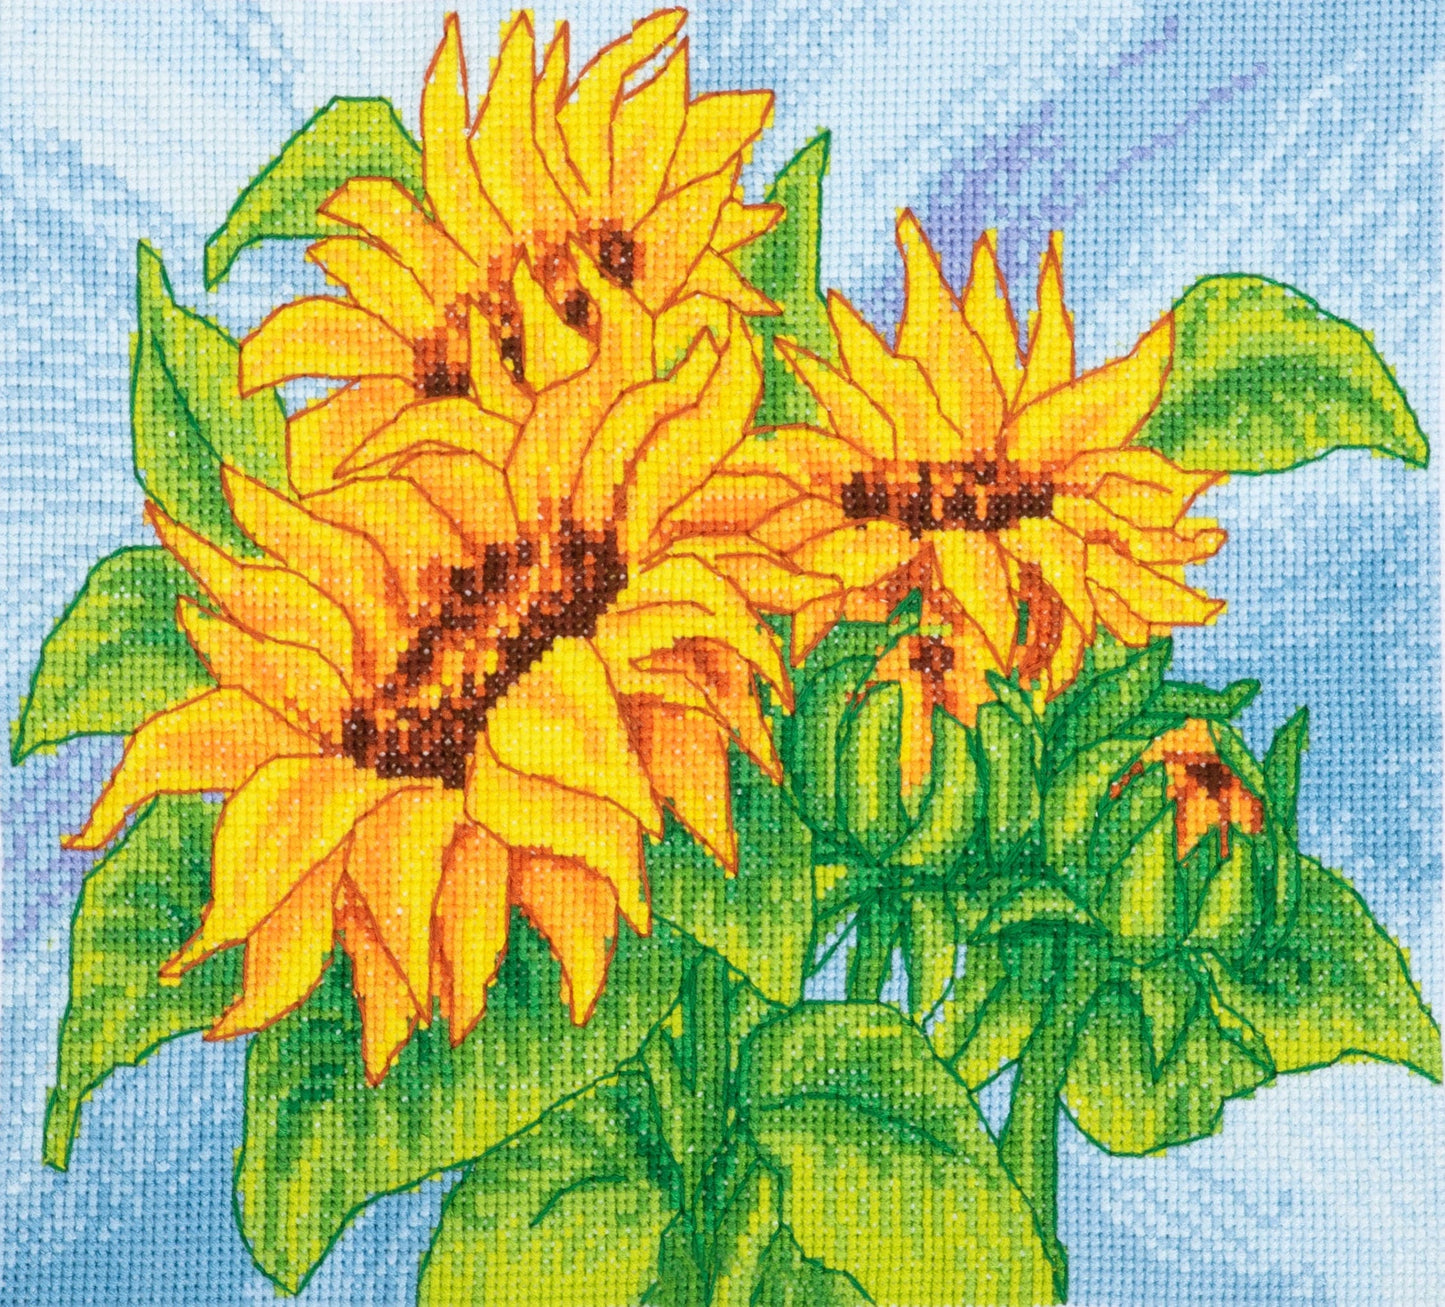 Cross Stitch Kit Sunflowers